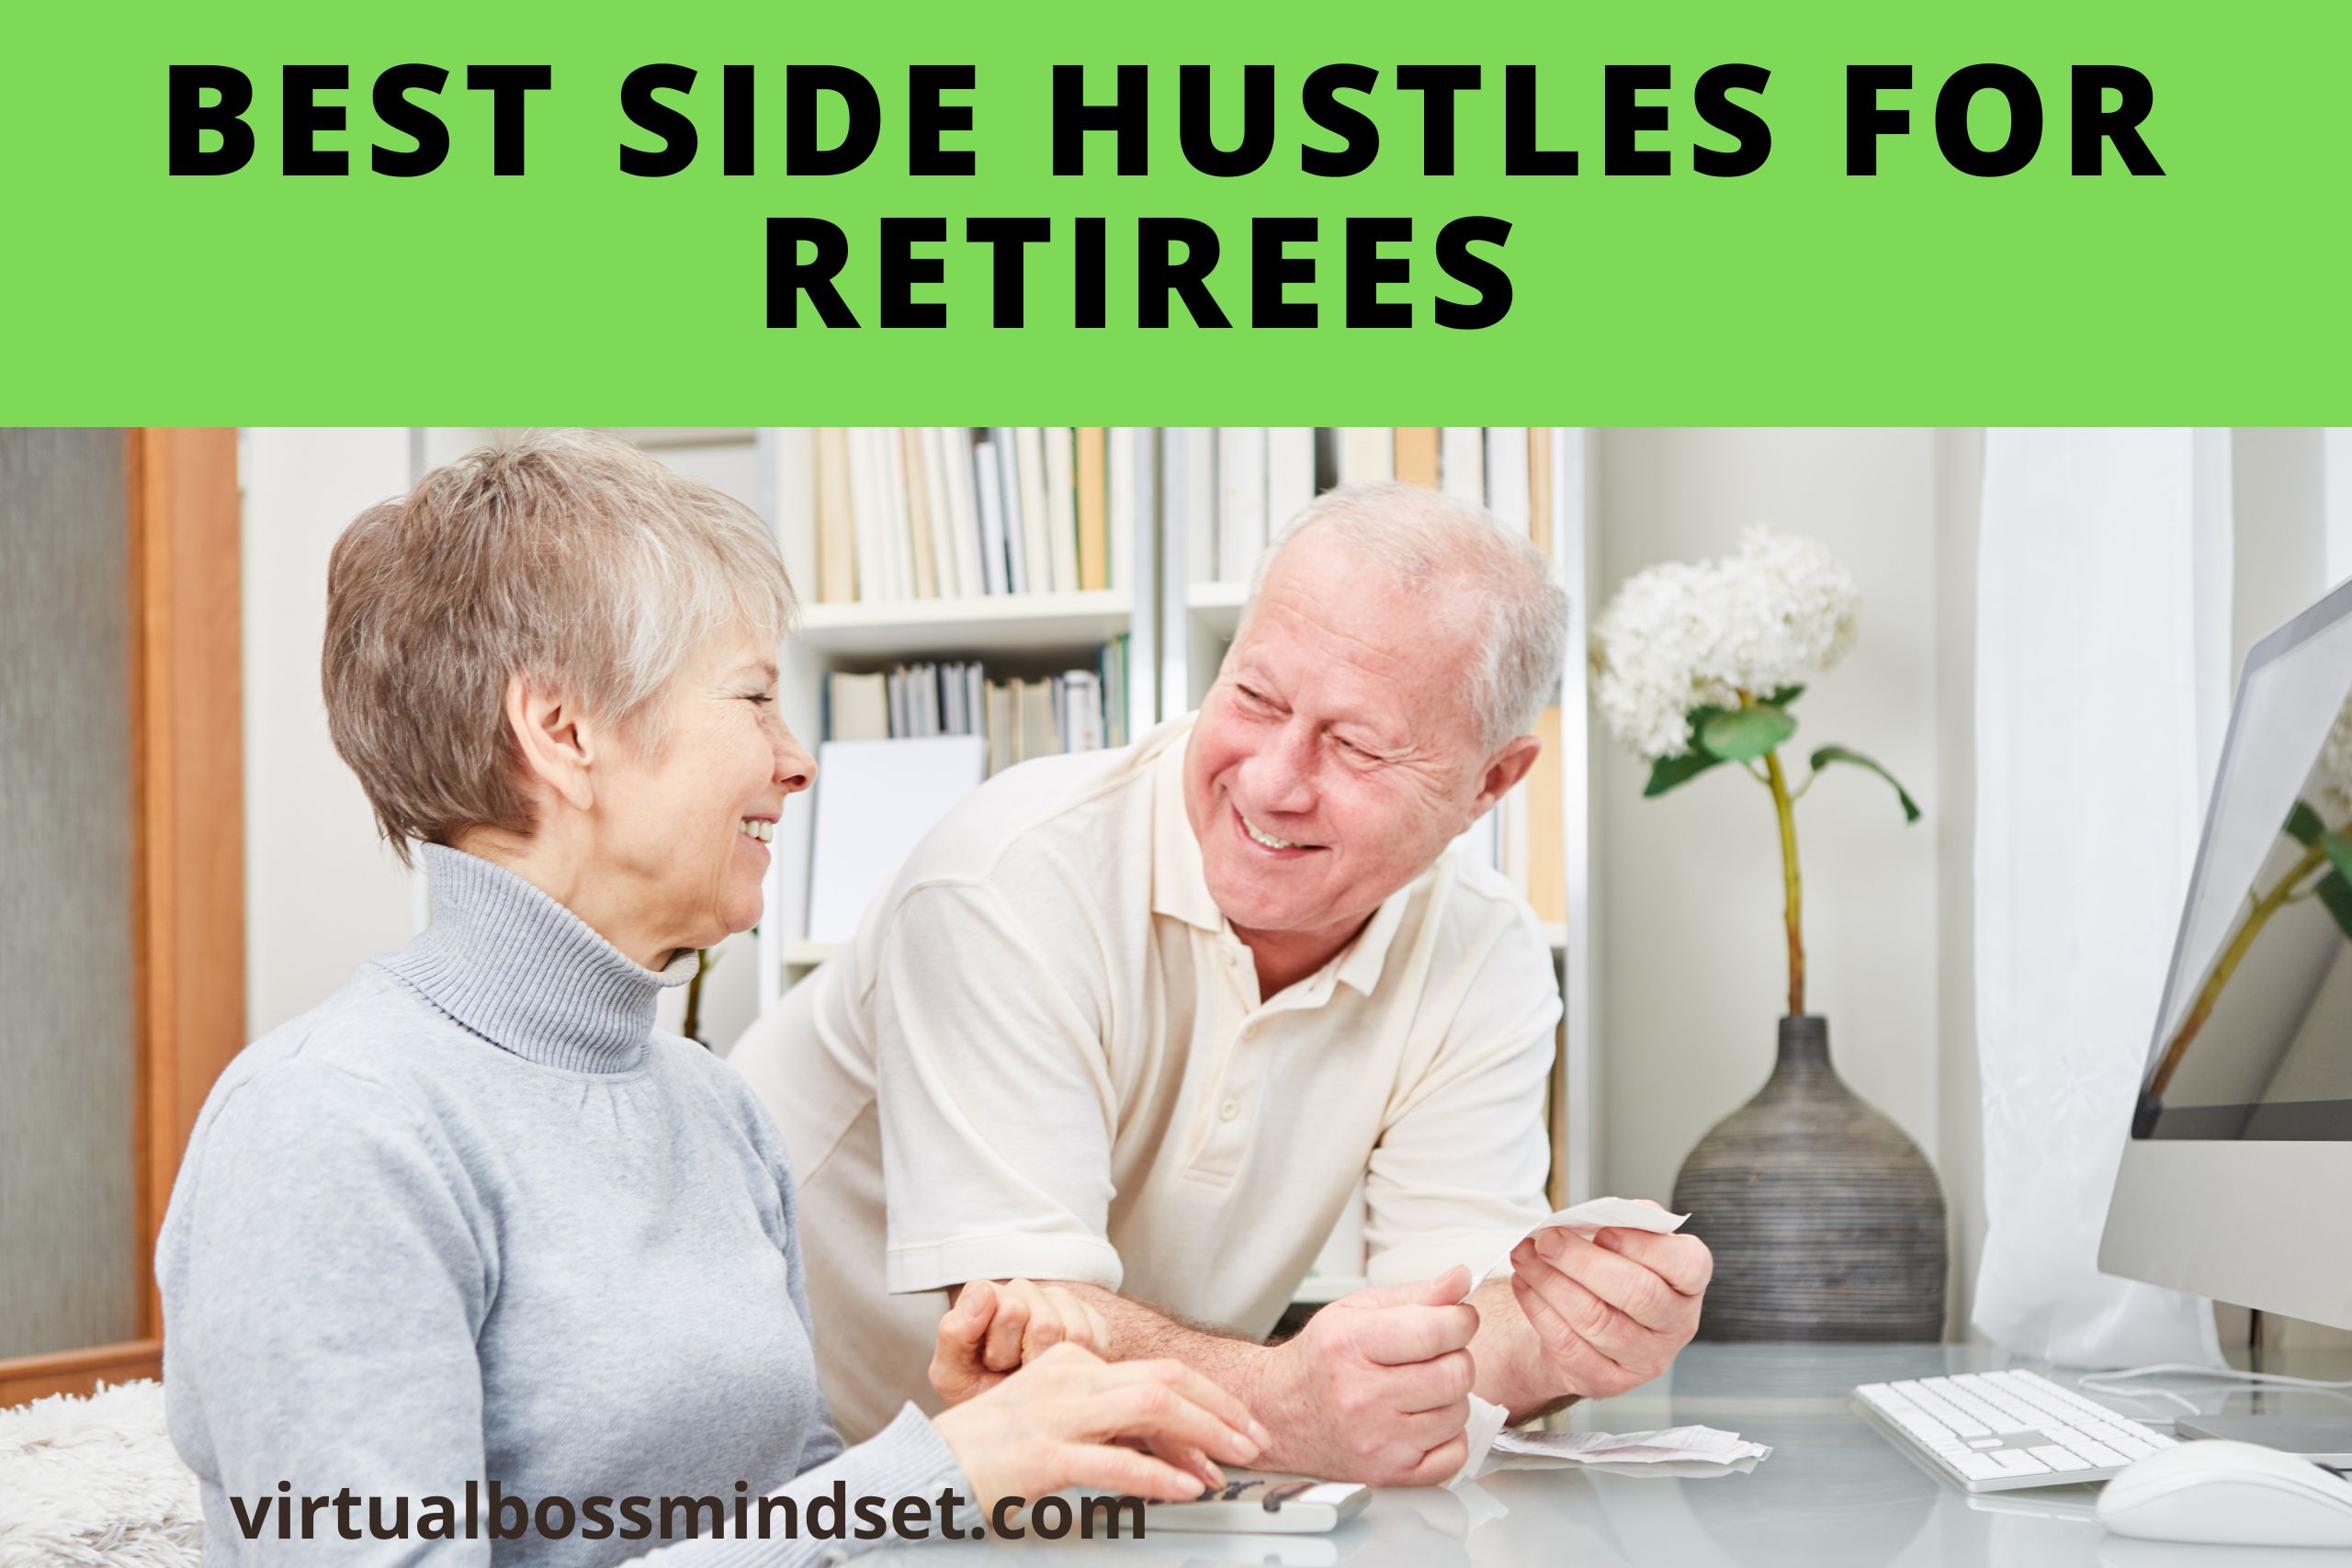 7 Best Side Hustles for Retirees to Make Extra Money